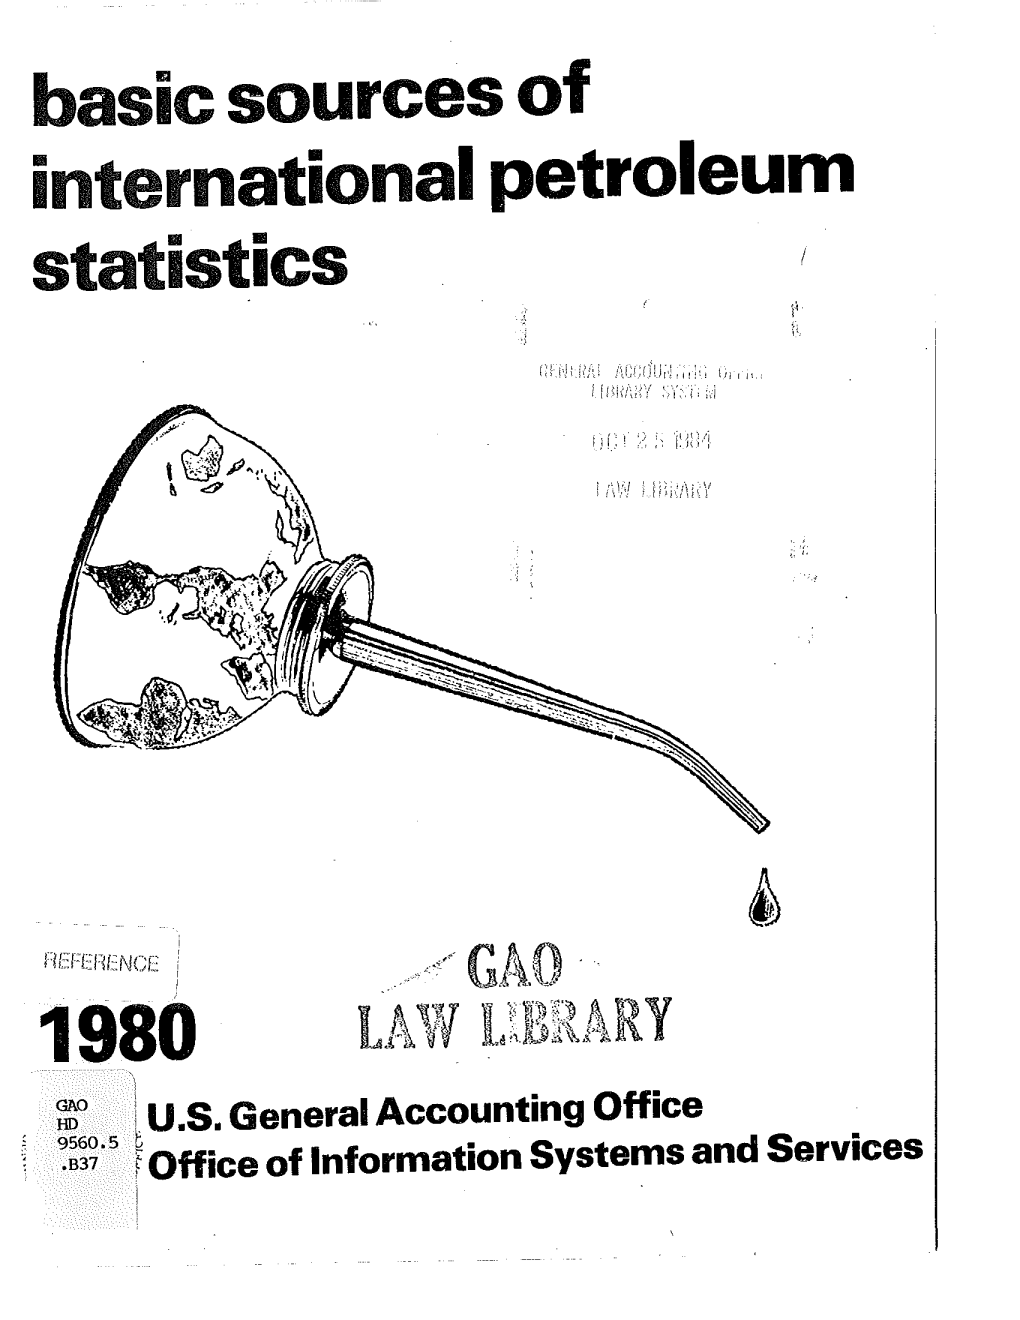 Basic Sources of International Petroleum Statistics